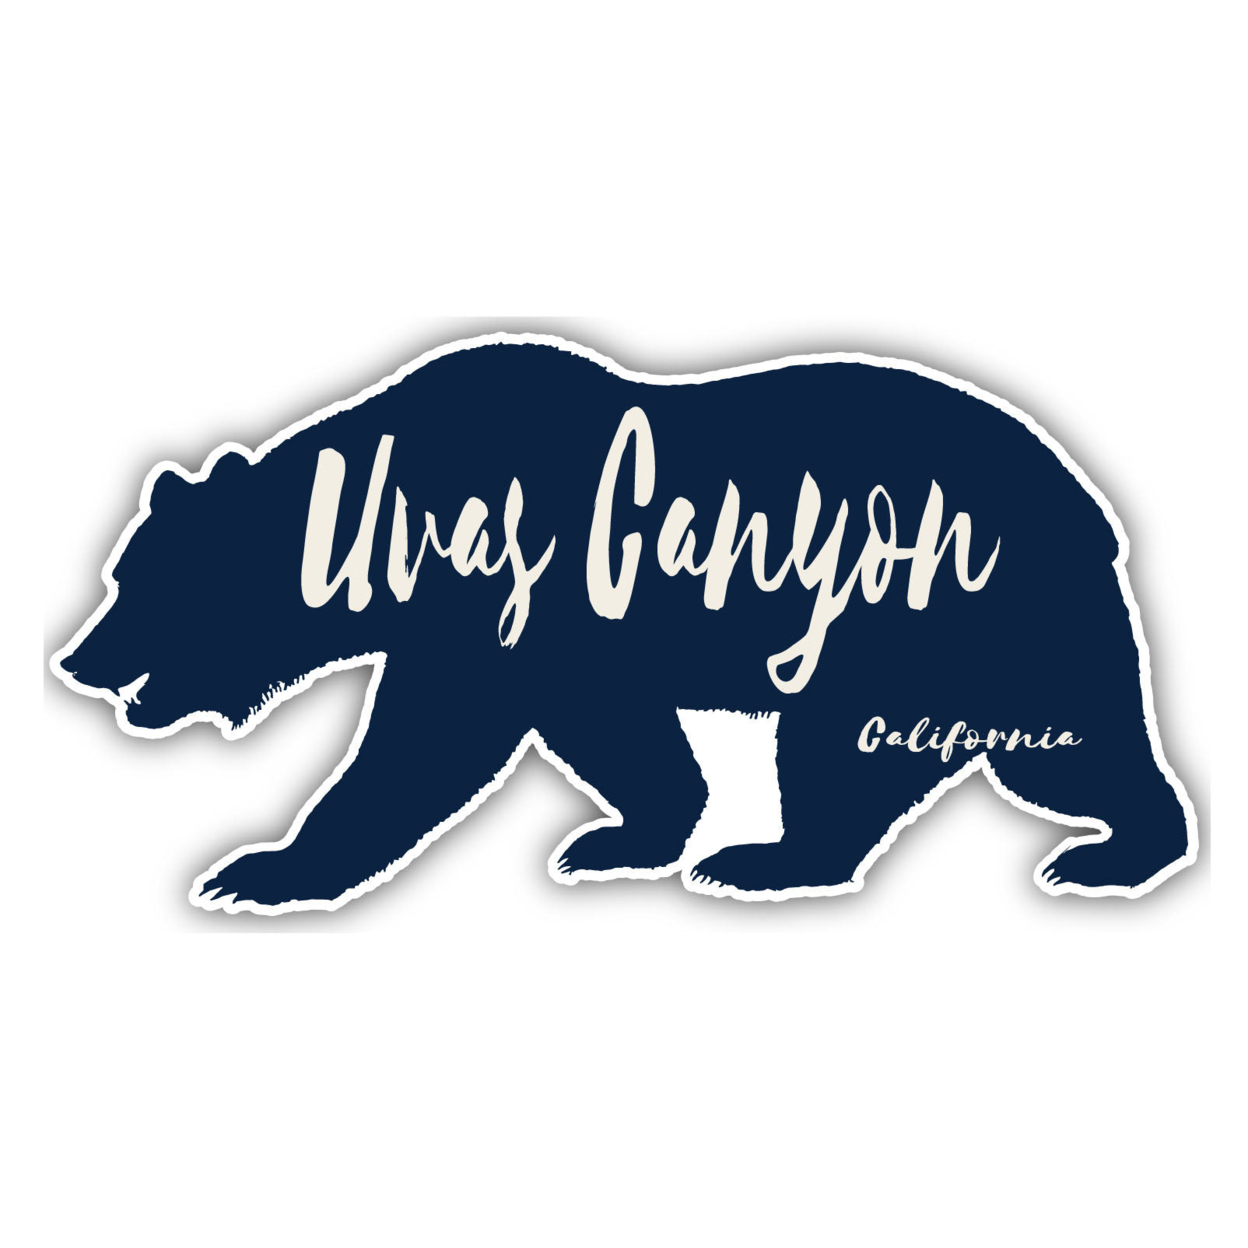 Uvas Canyon California Souvenir Decorative Stickers (Choose Theme And Size) - Single Unit, 4-Inch, Bear